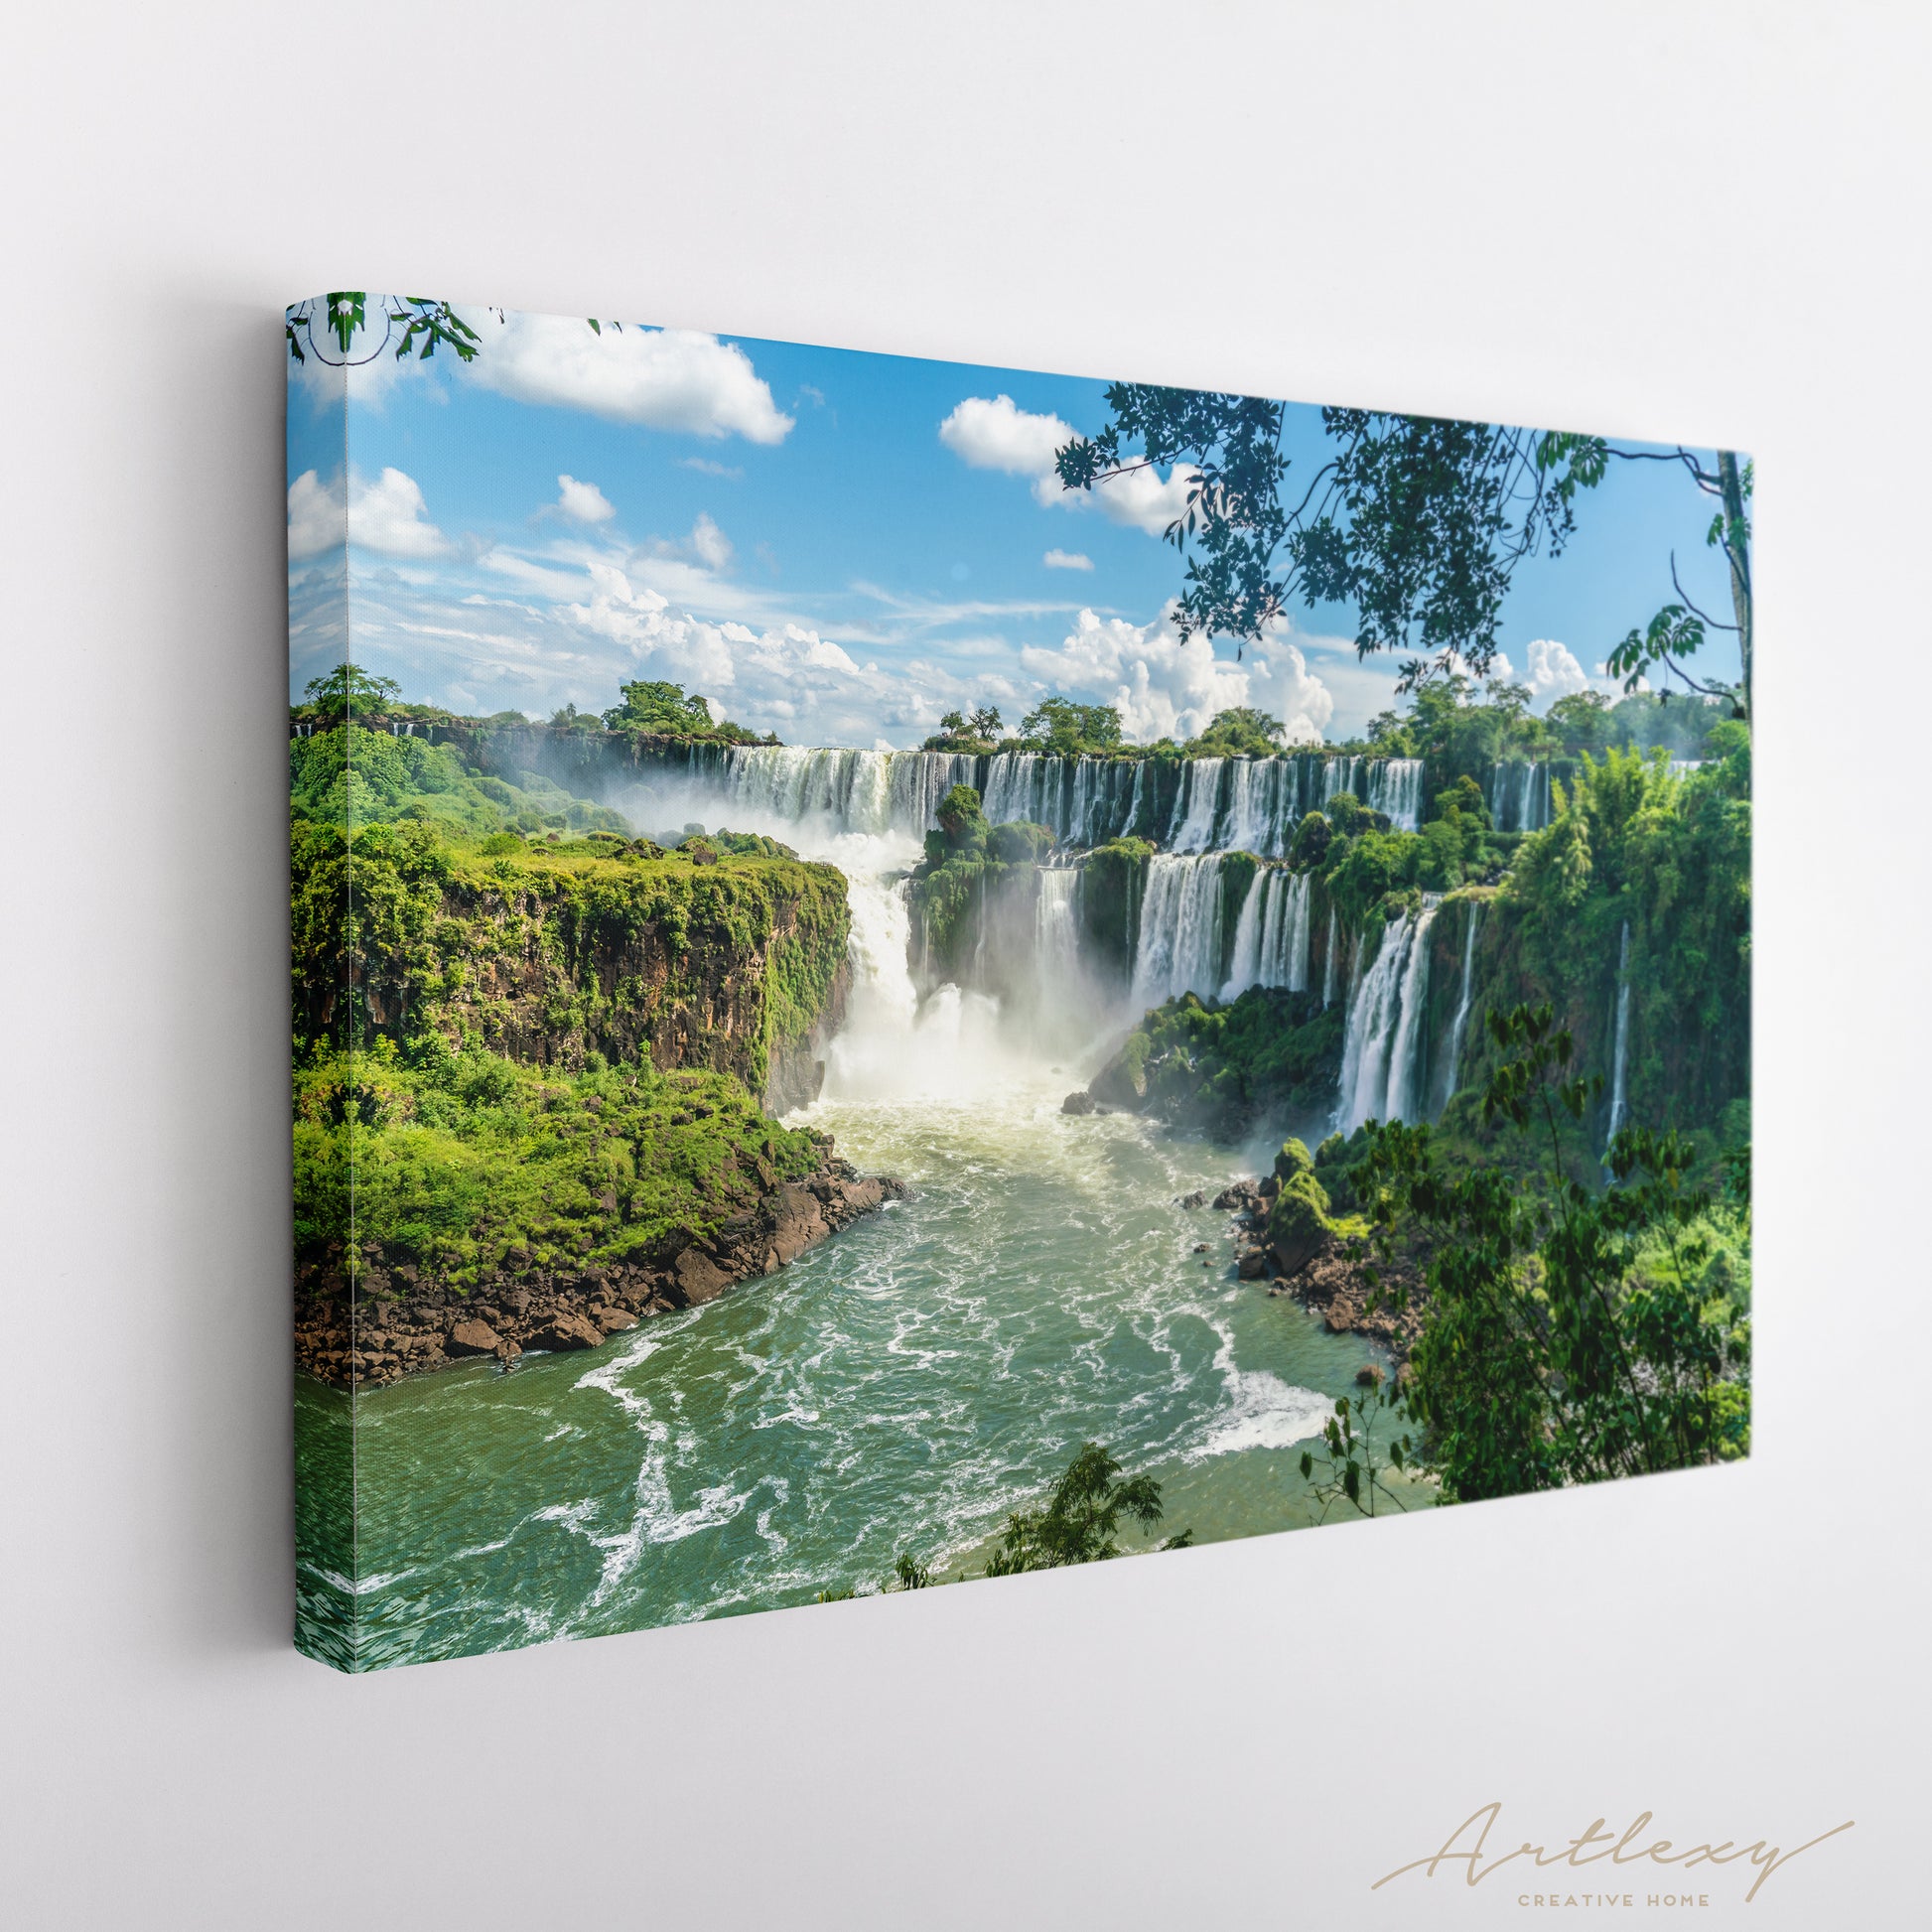 Iguazu Falls Argentina National Park Canvas Print ArtLexy 1 Panel 24"x16" inches 